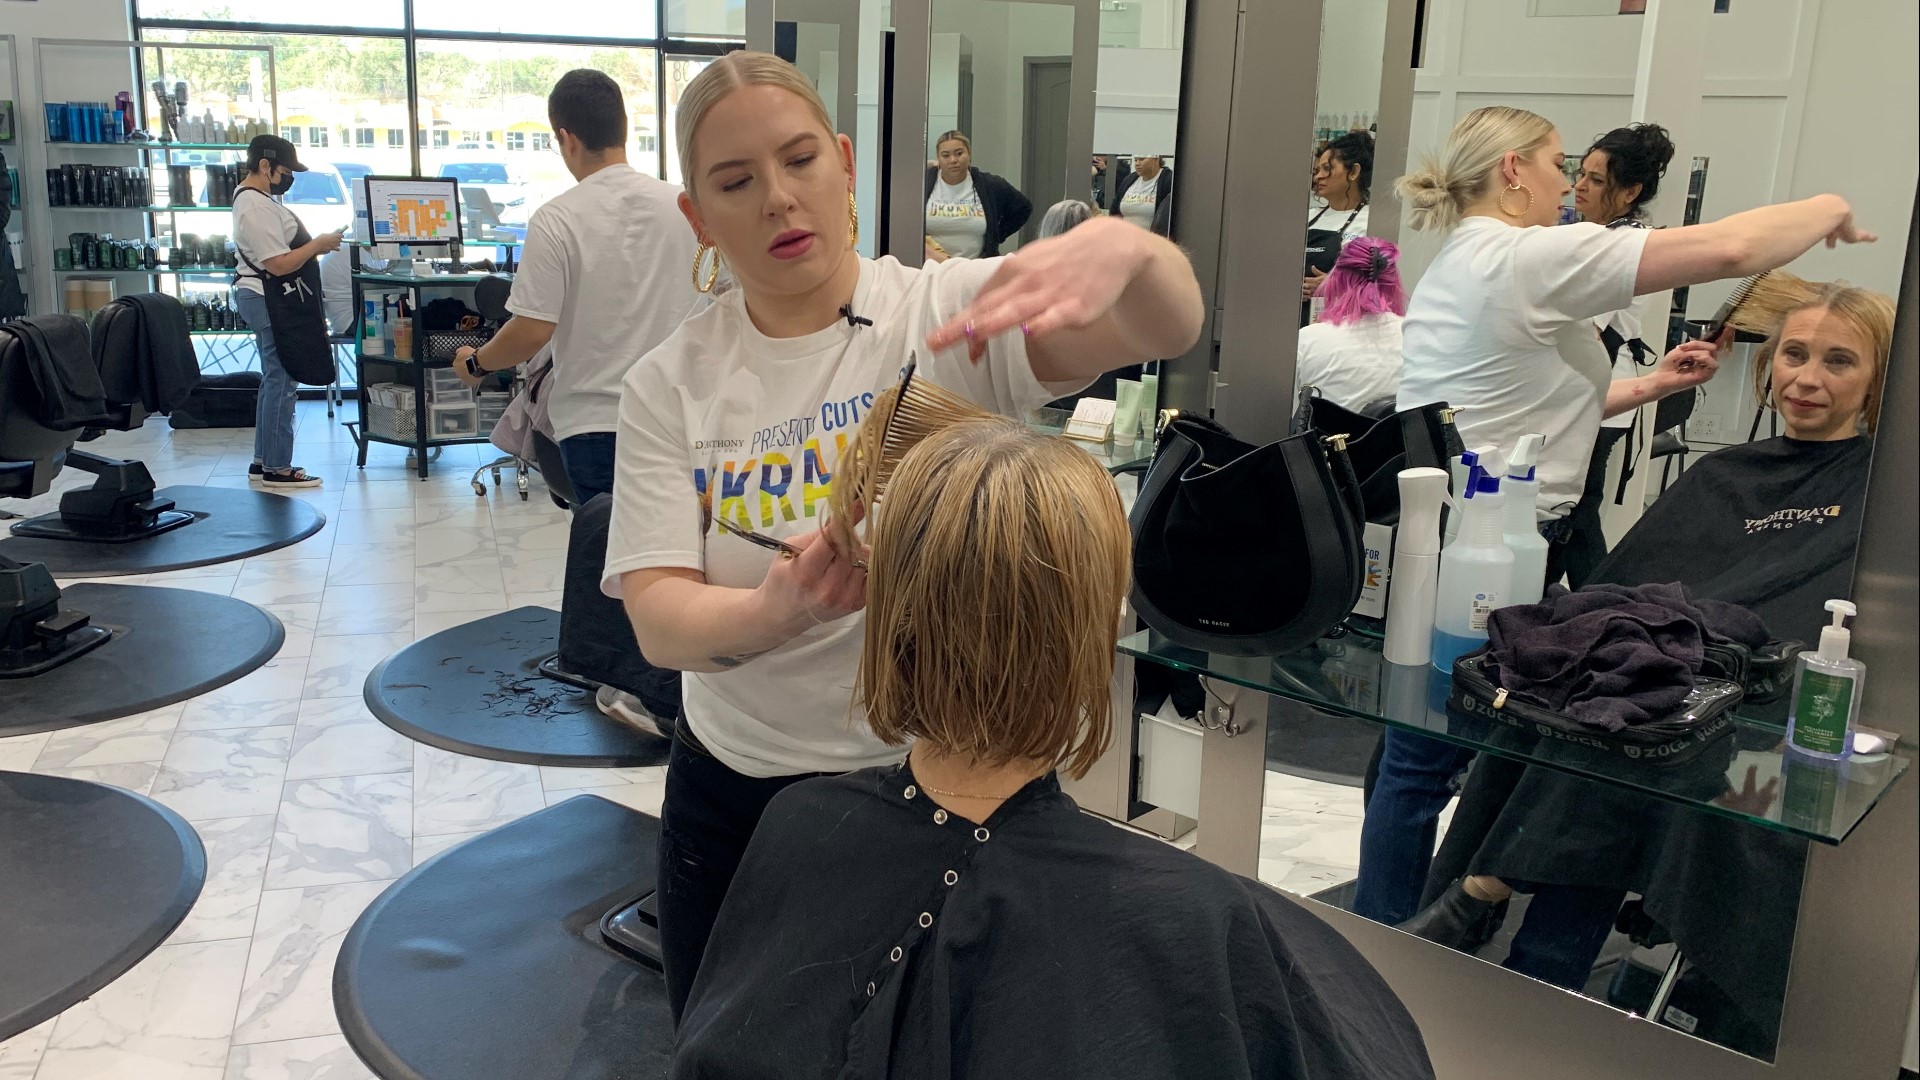 On Sunday, Haircuts for Ukraine was held at D'Anthony Salon Spa in Dominion benefitting Ukrainian San Antonio's fundraising efforts.